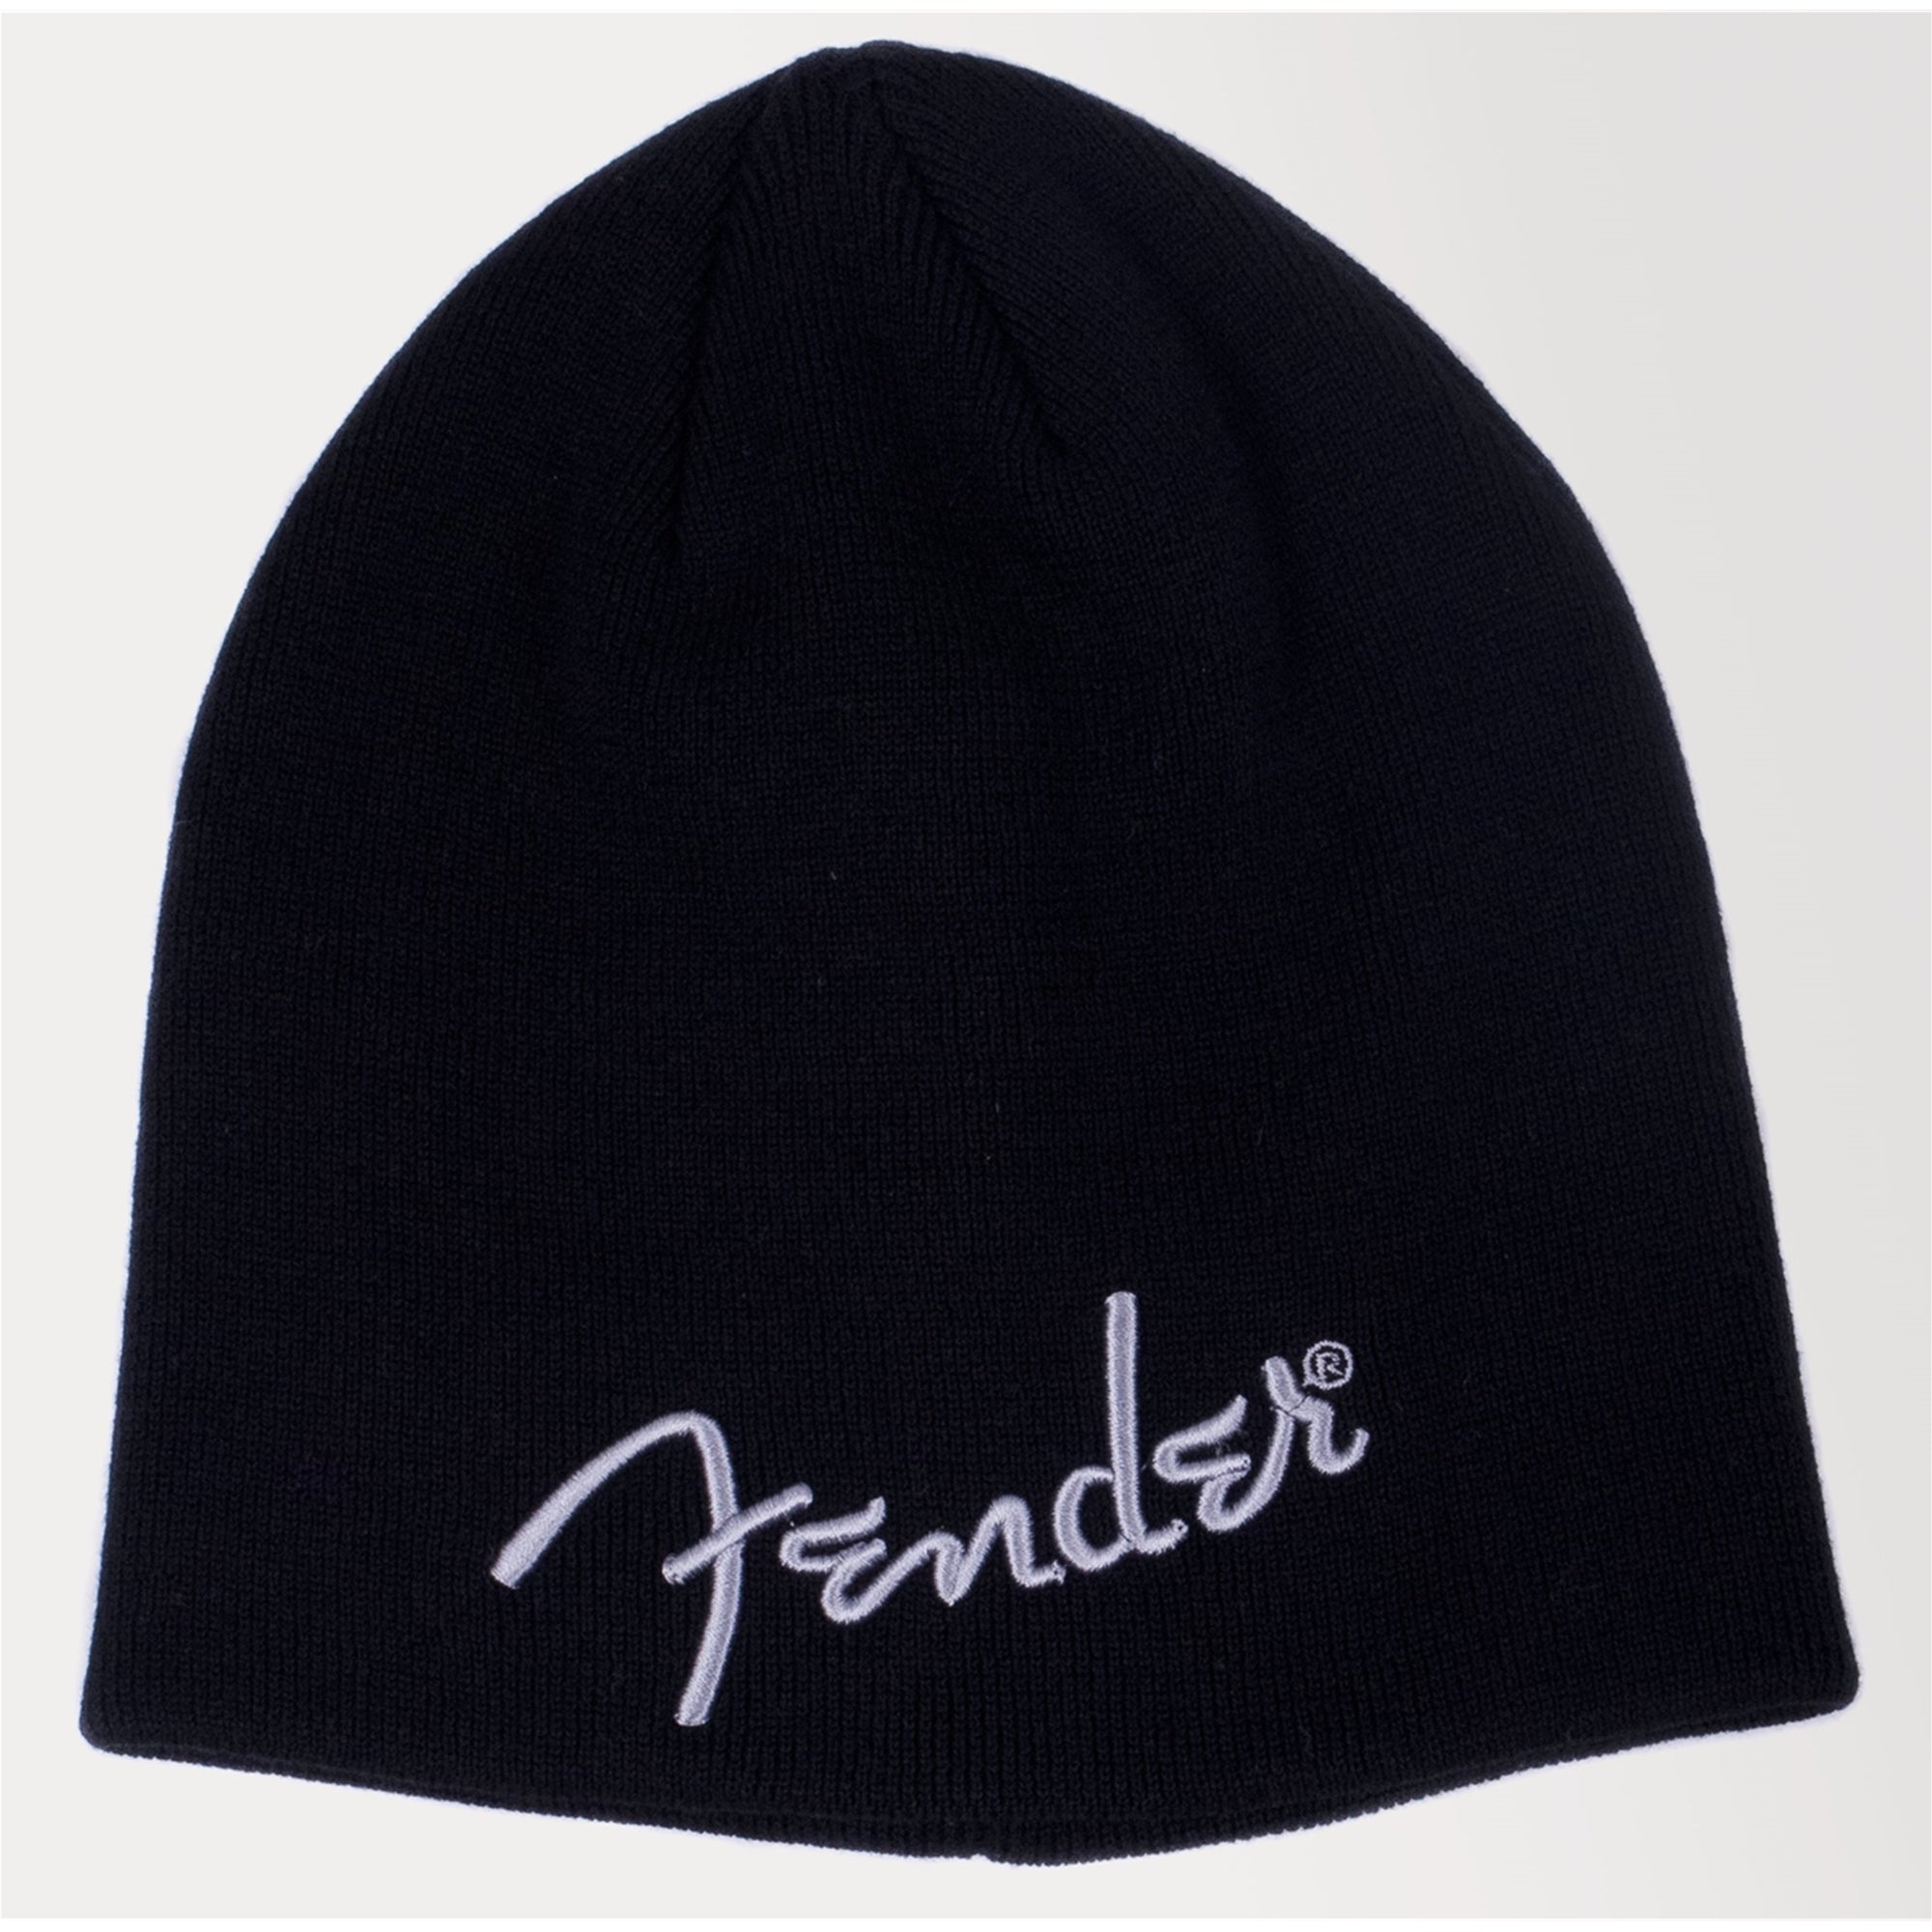 FENDER 9106111706 Logo Beanie, Black, One Size